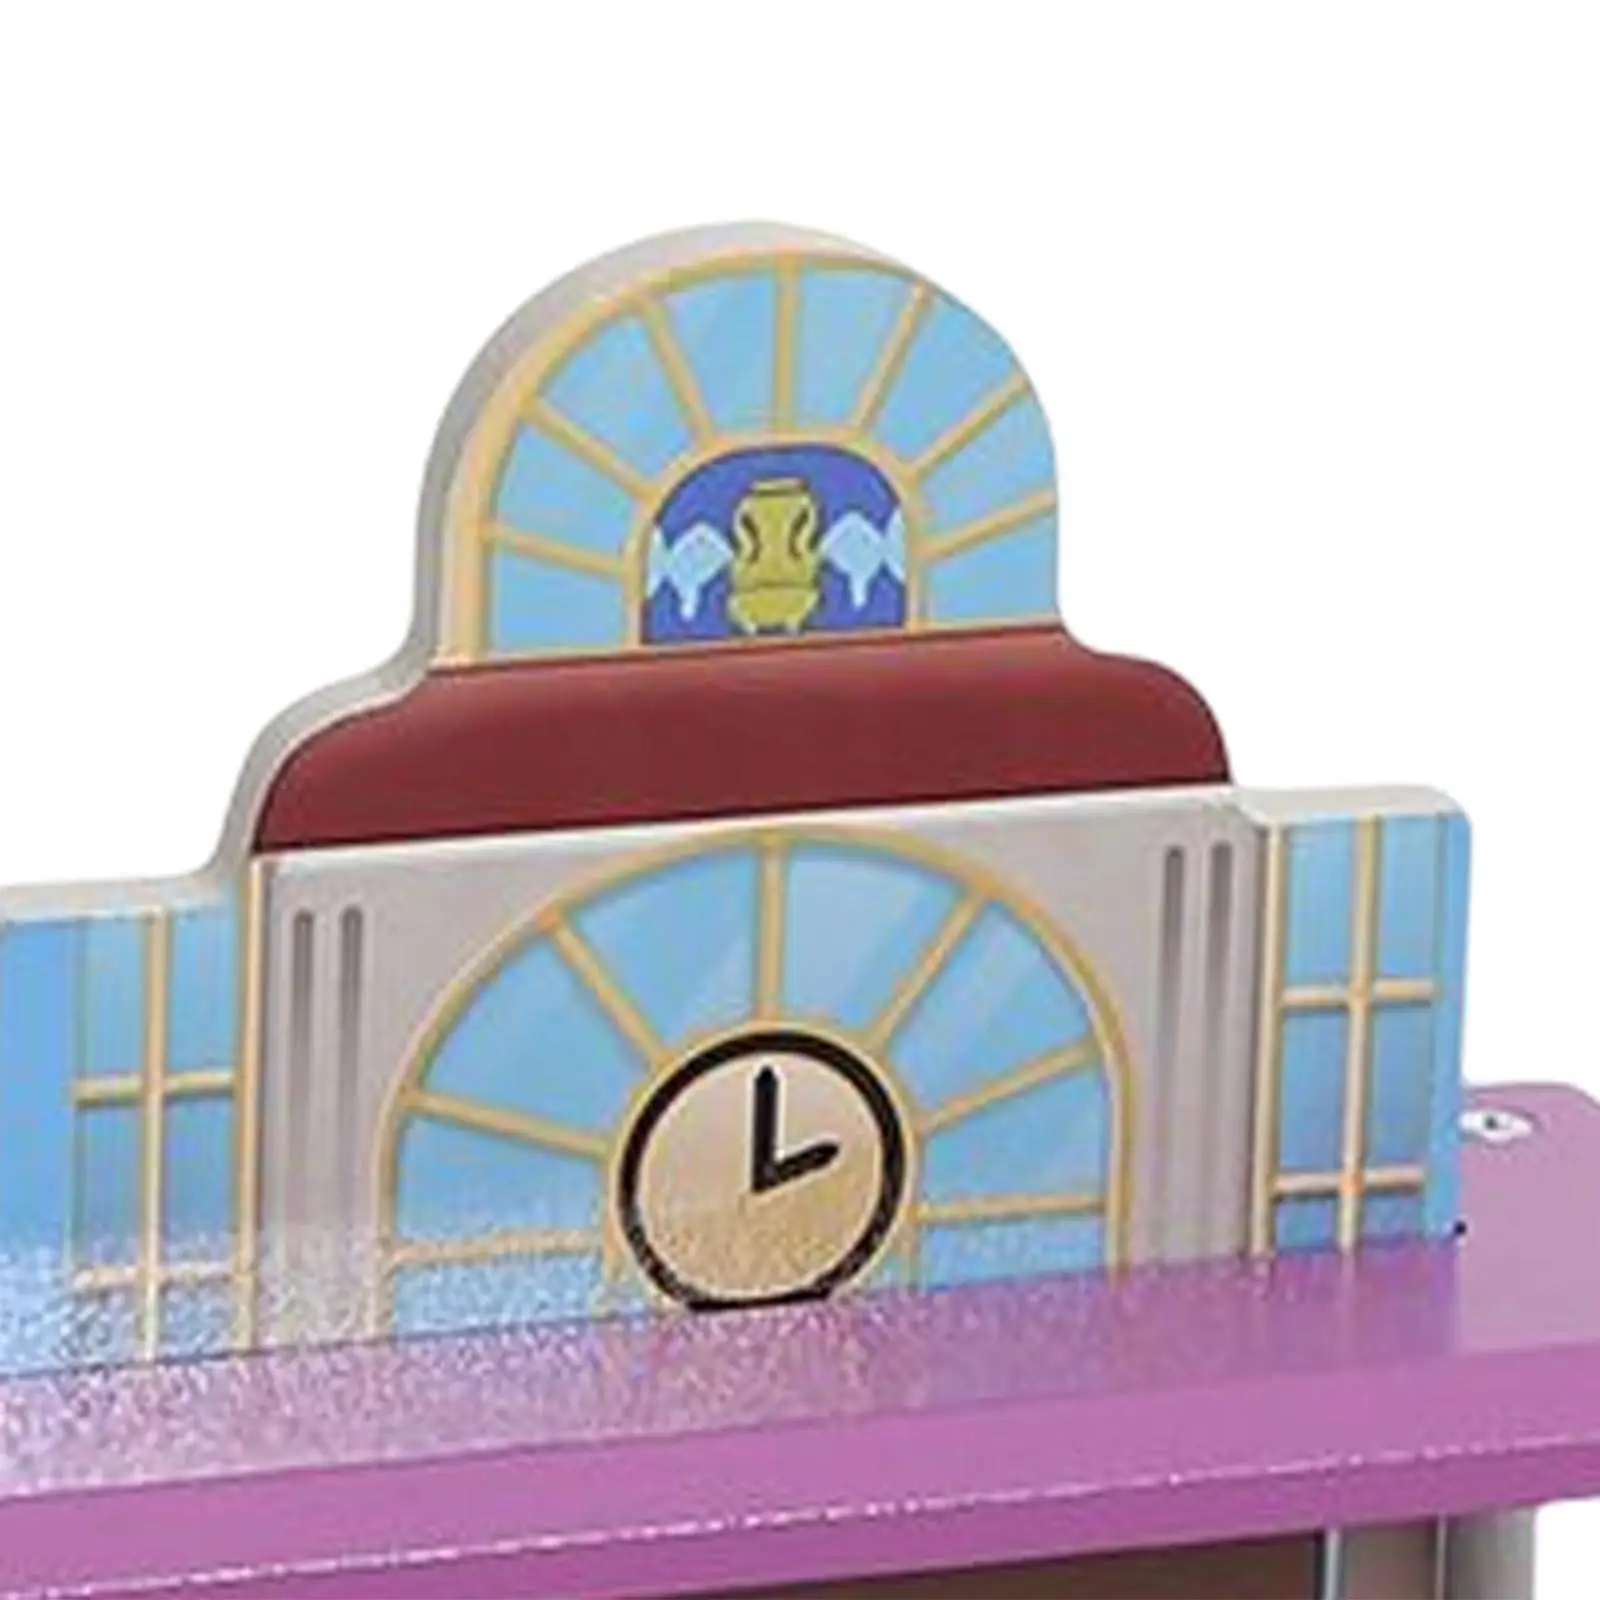 Wooden Railroad Clock Platform Track Accessories Small Locomotive Rail Car Toys Landscape for Children Kids Birthday Gifts